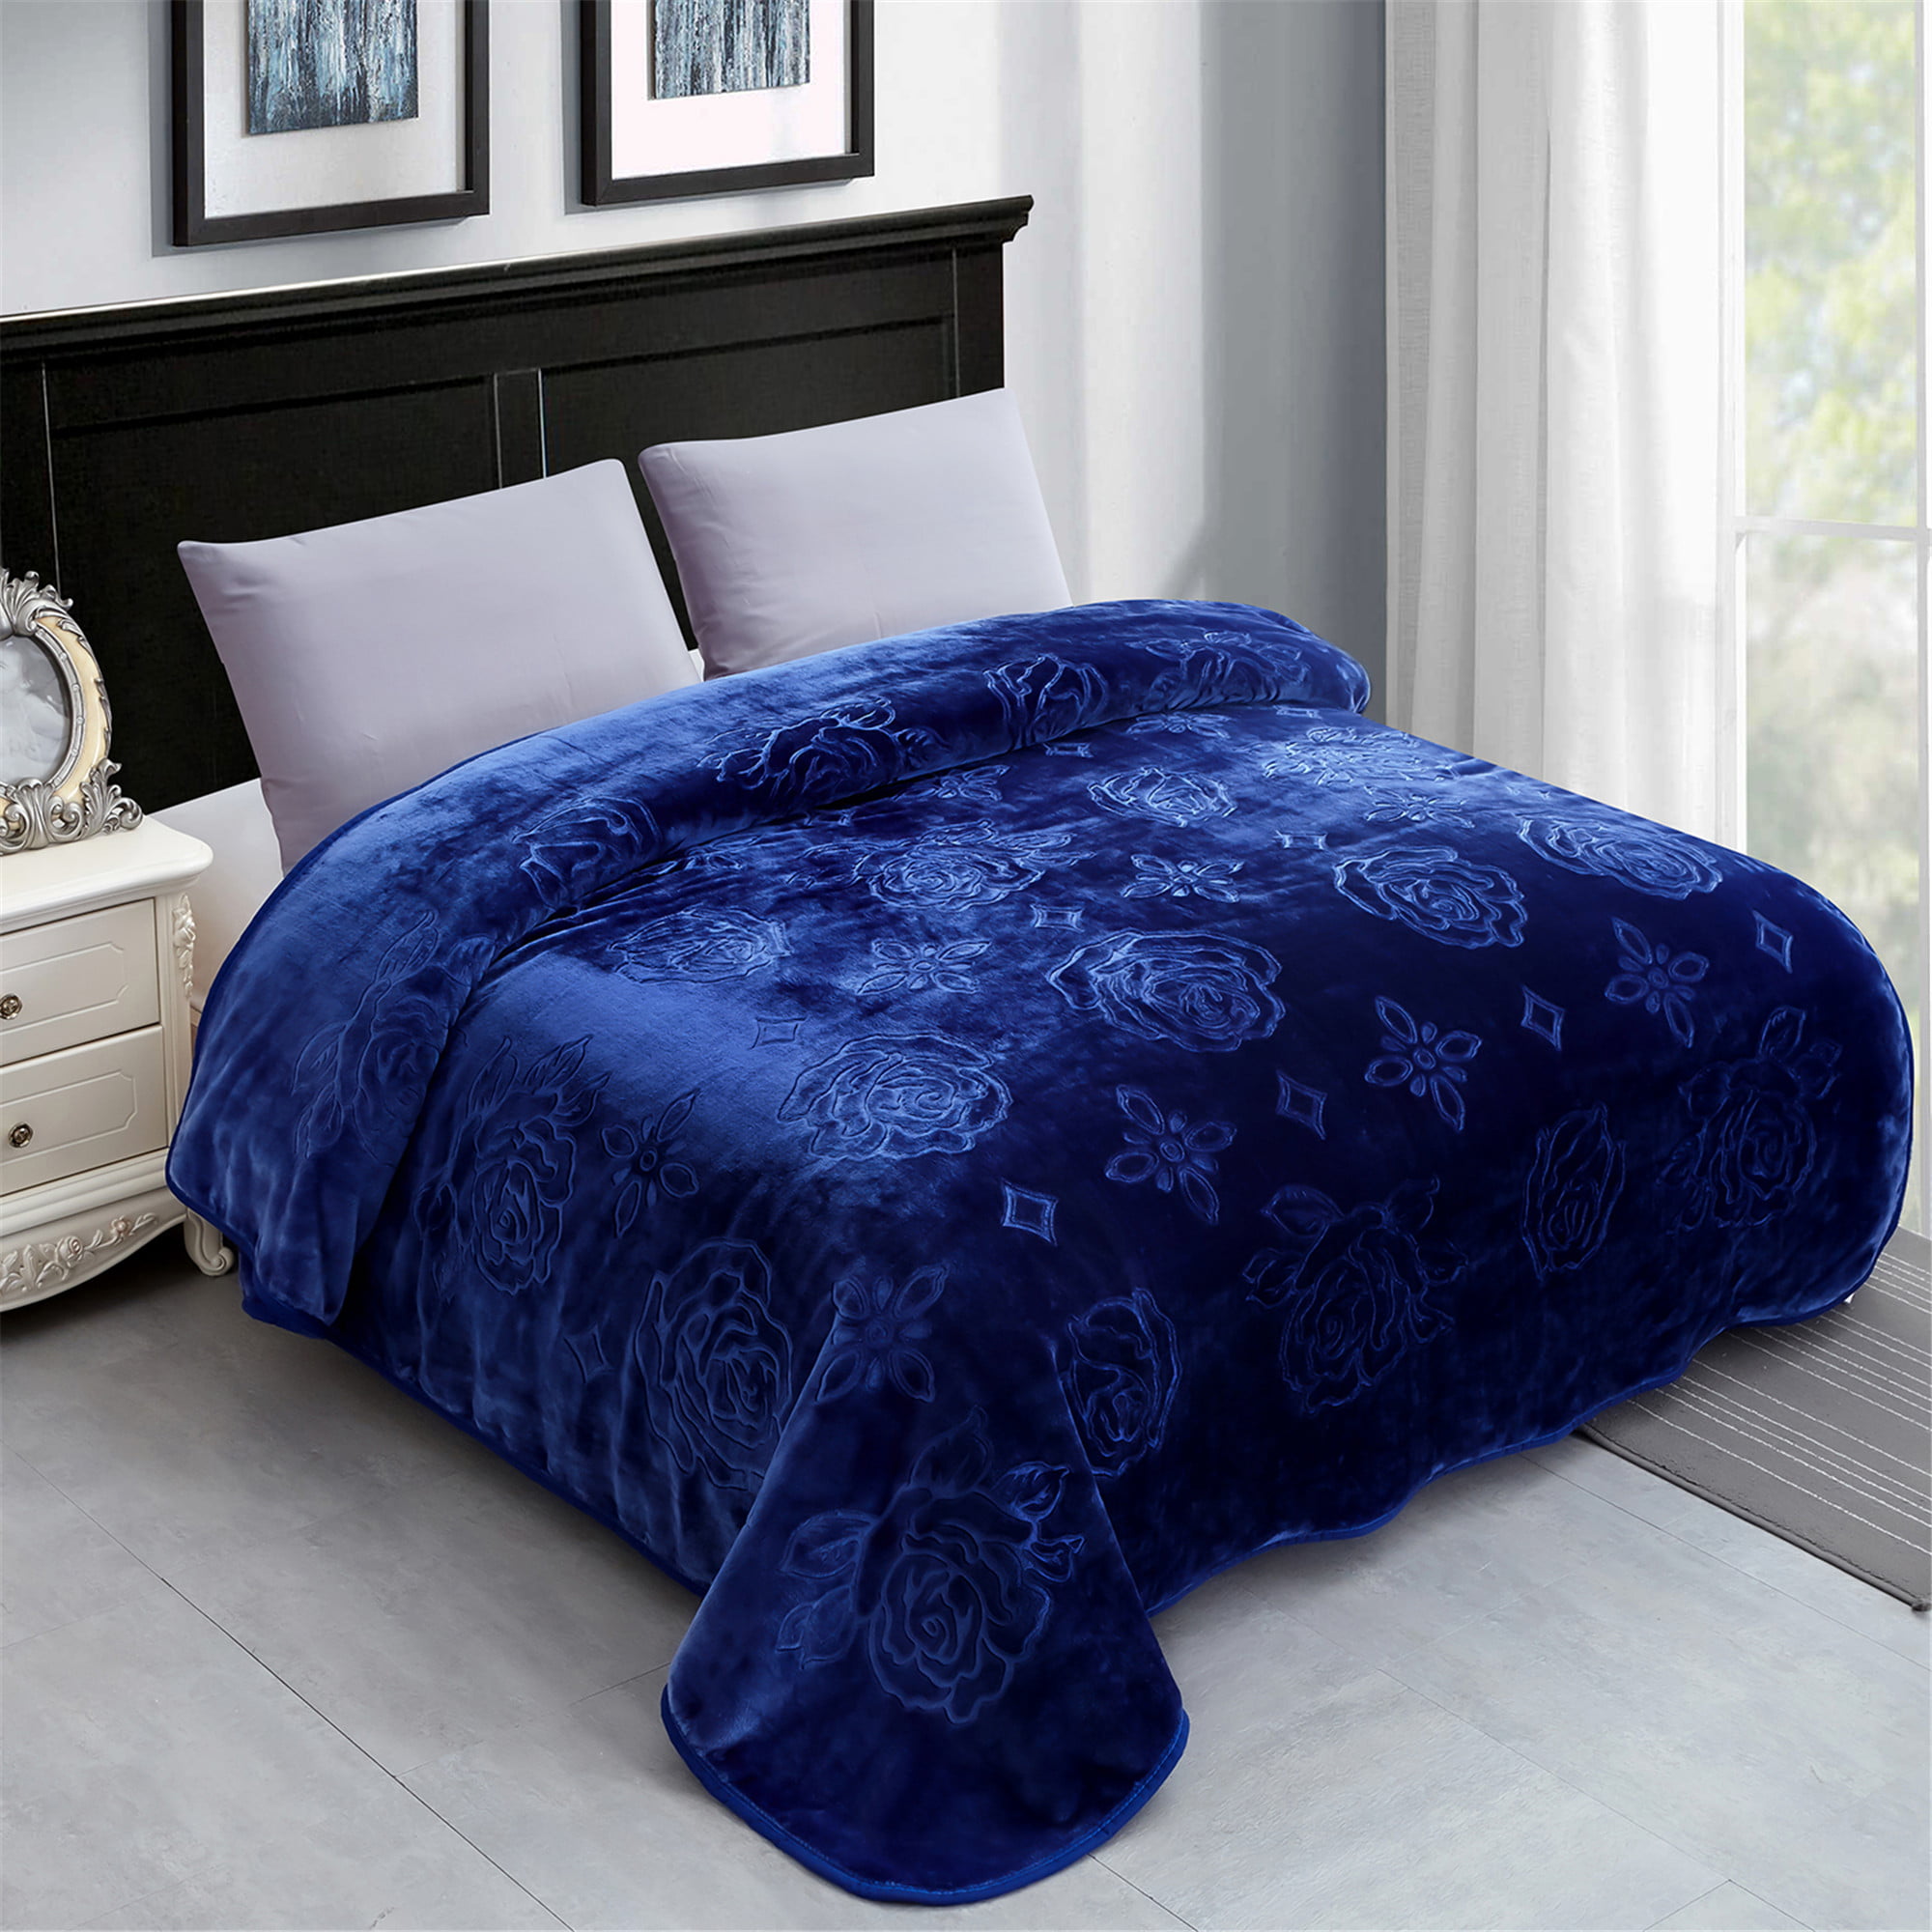 Premium Soft Bed Blanket Queen Size (79